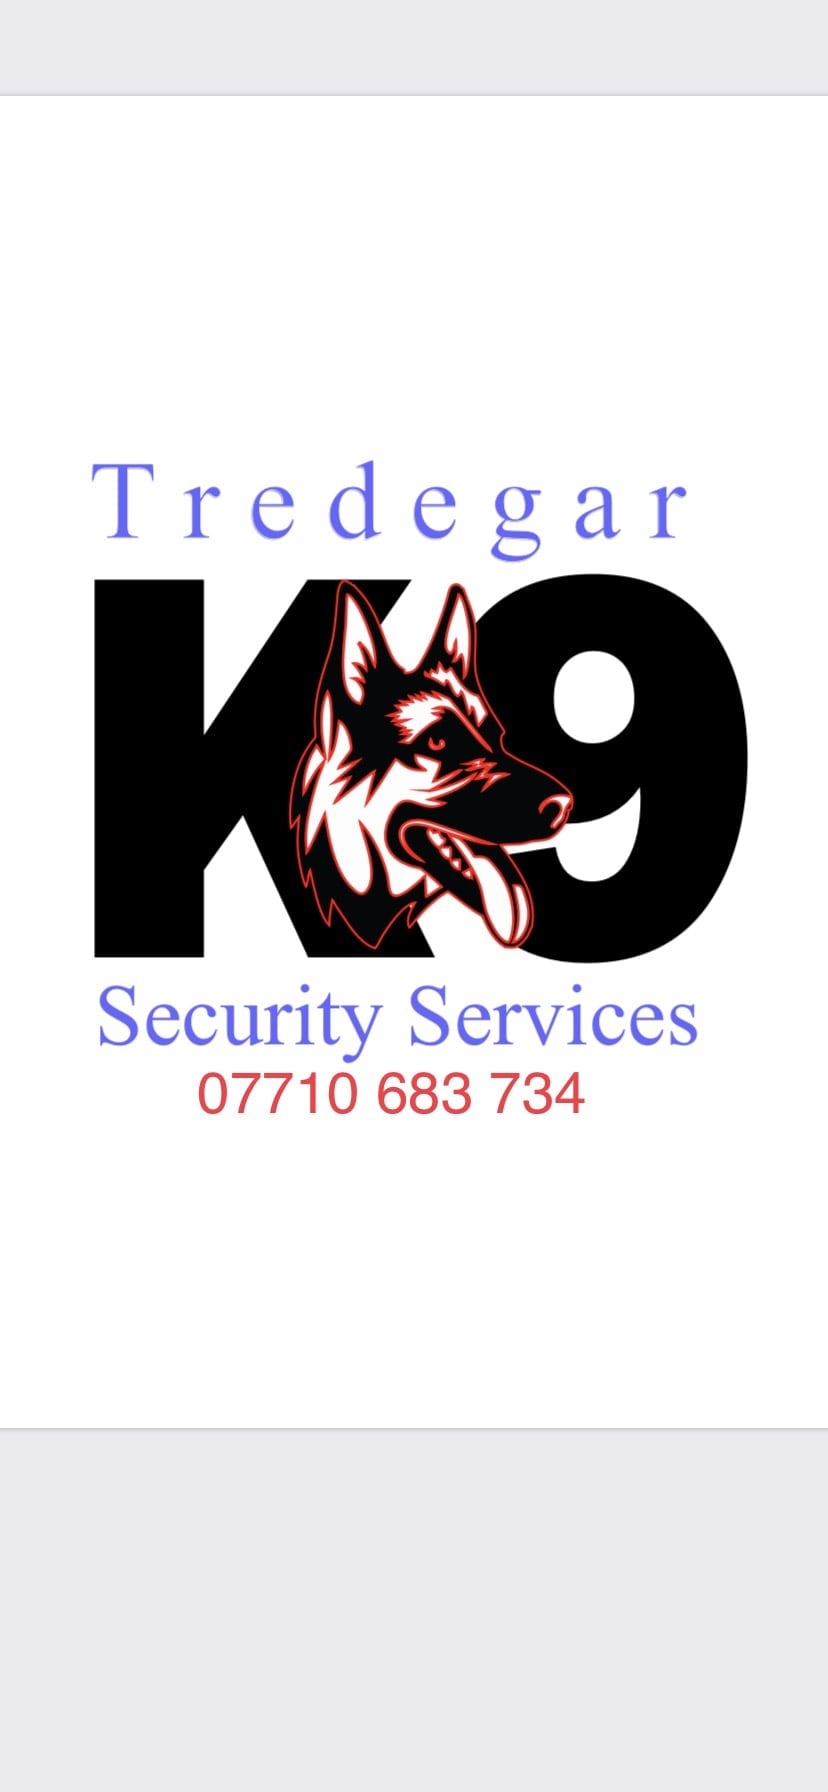 Tredegar K9 Security Services ltd 